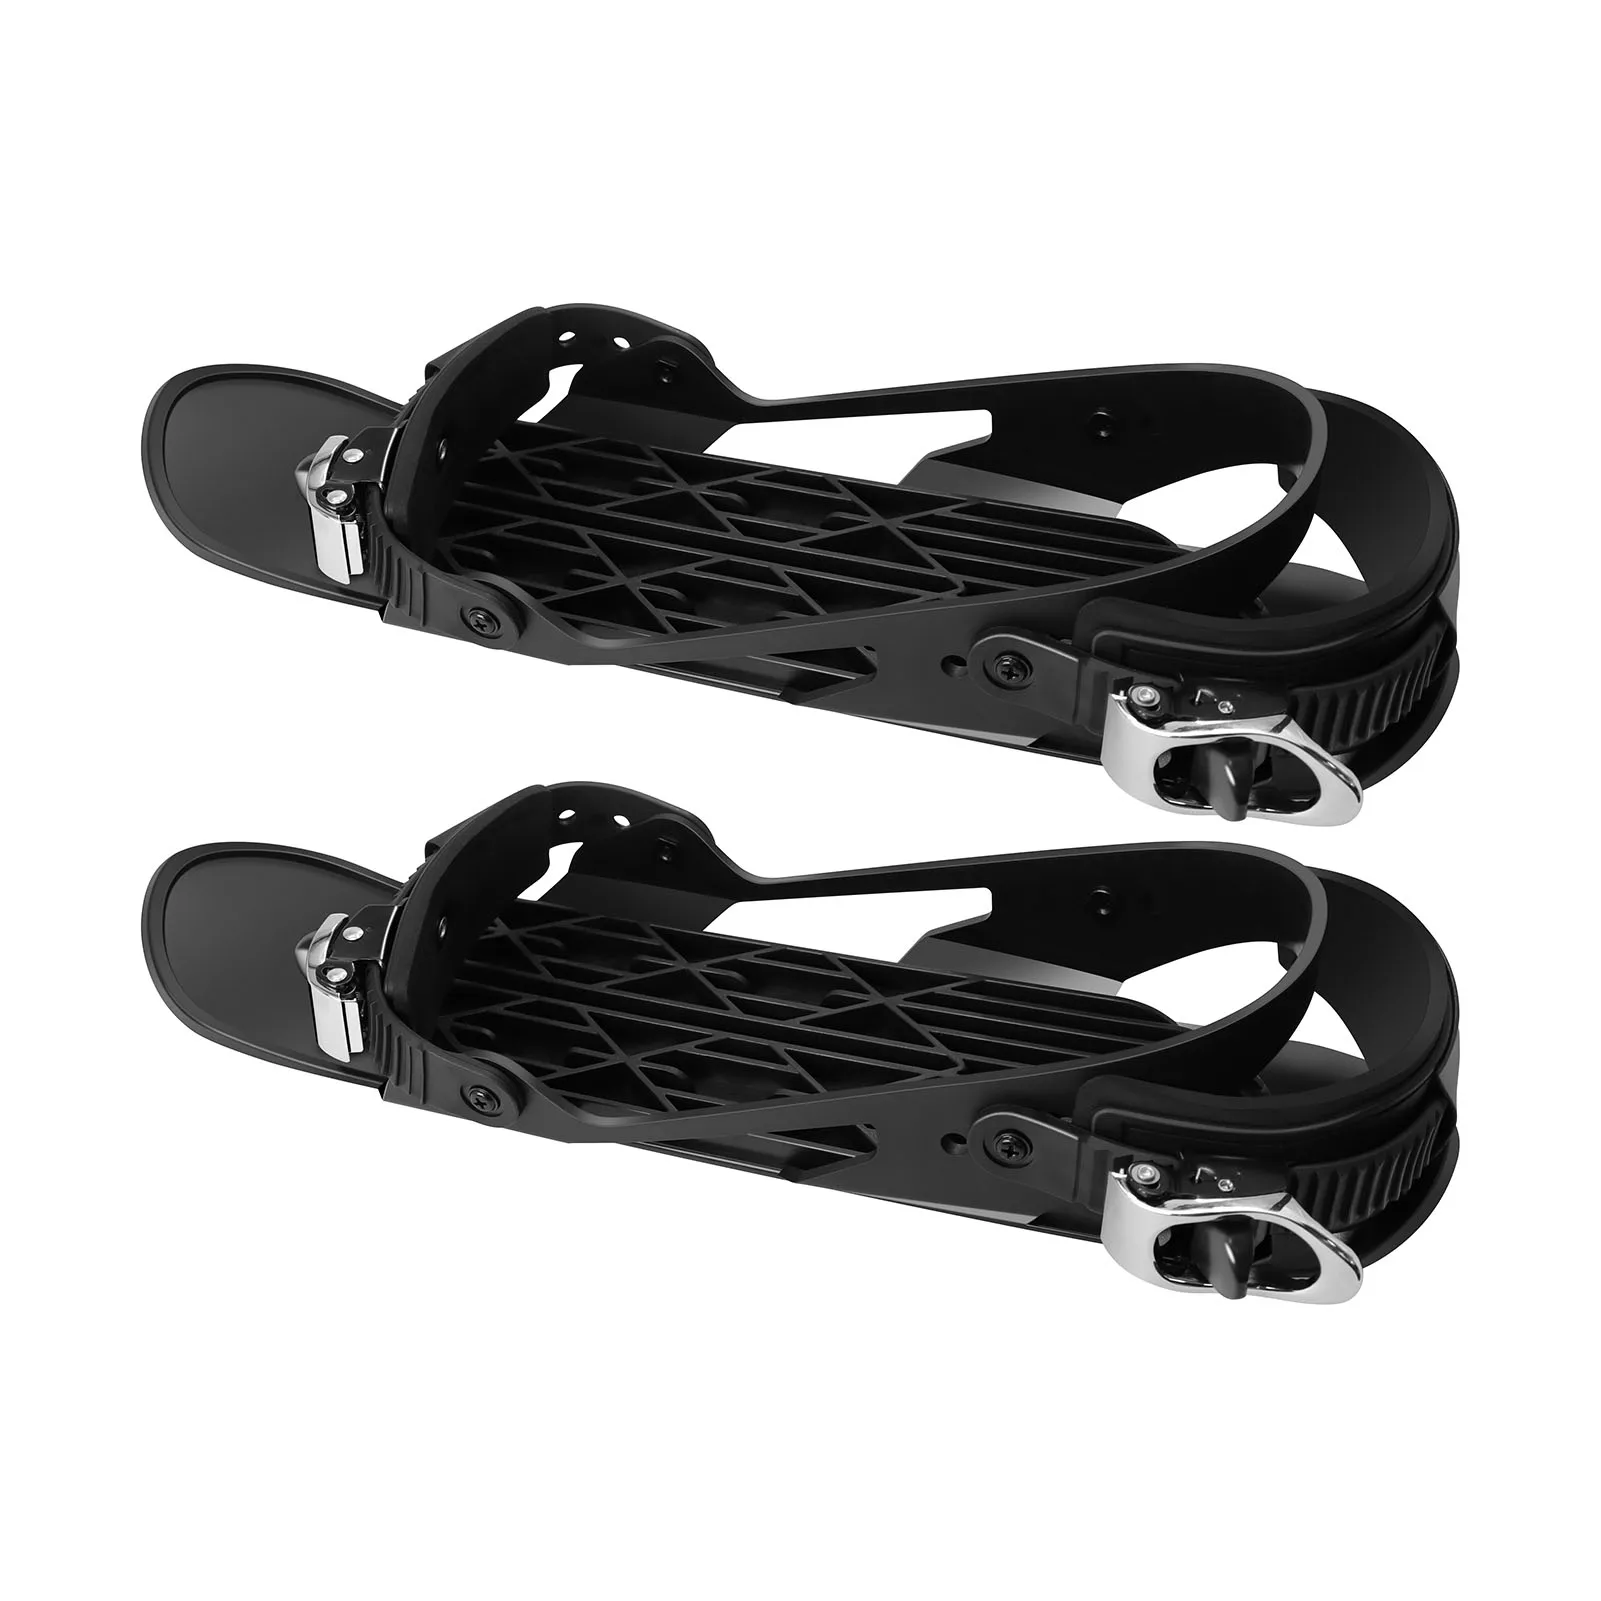 Portable Mini Ski Skates For Snow The Short Skiboard Snowblades High Quality Adjustable Bindings Outdoor Skiing Shoes Snow Board